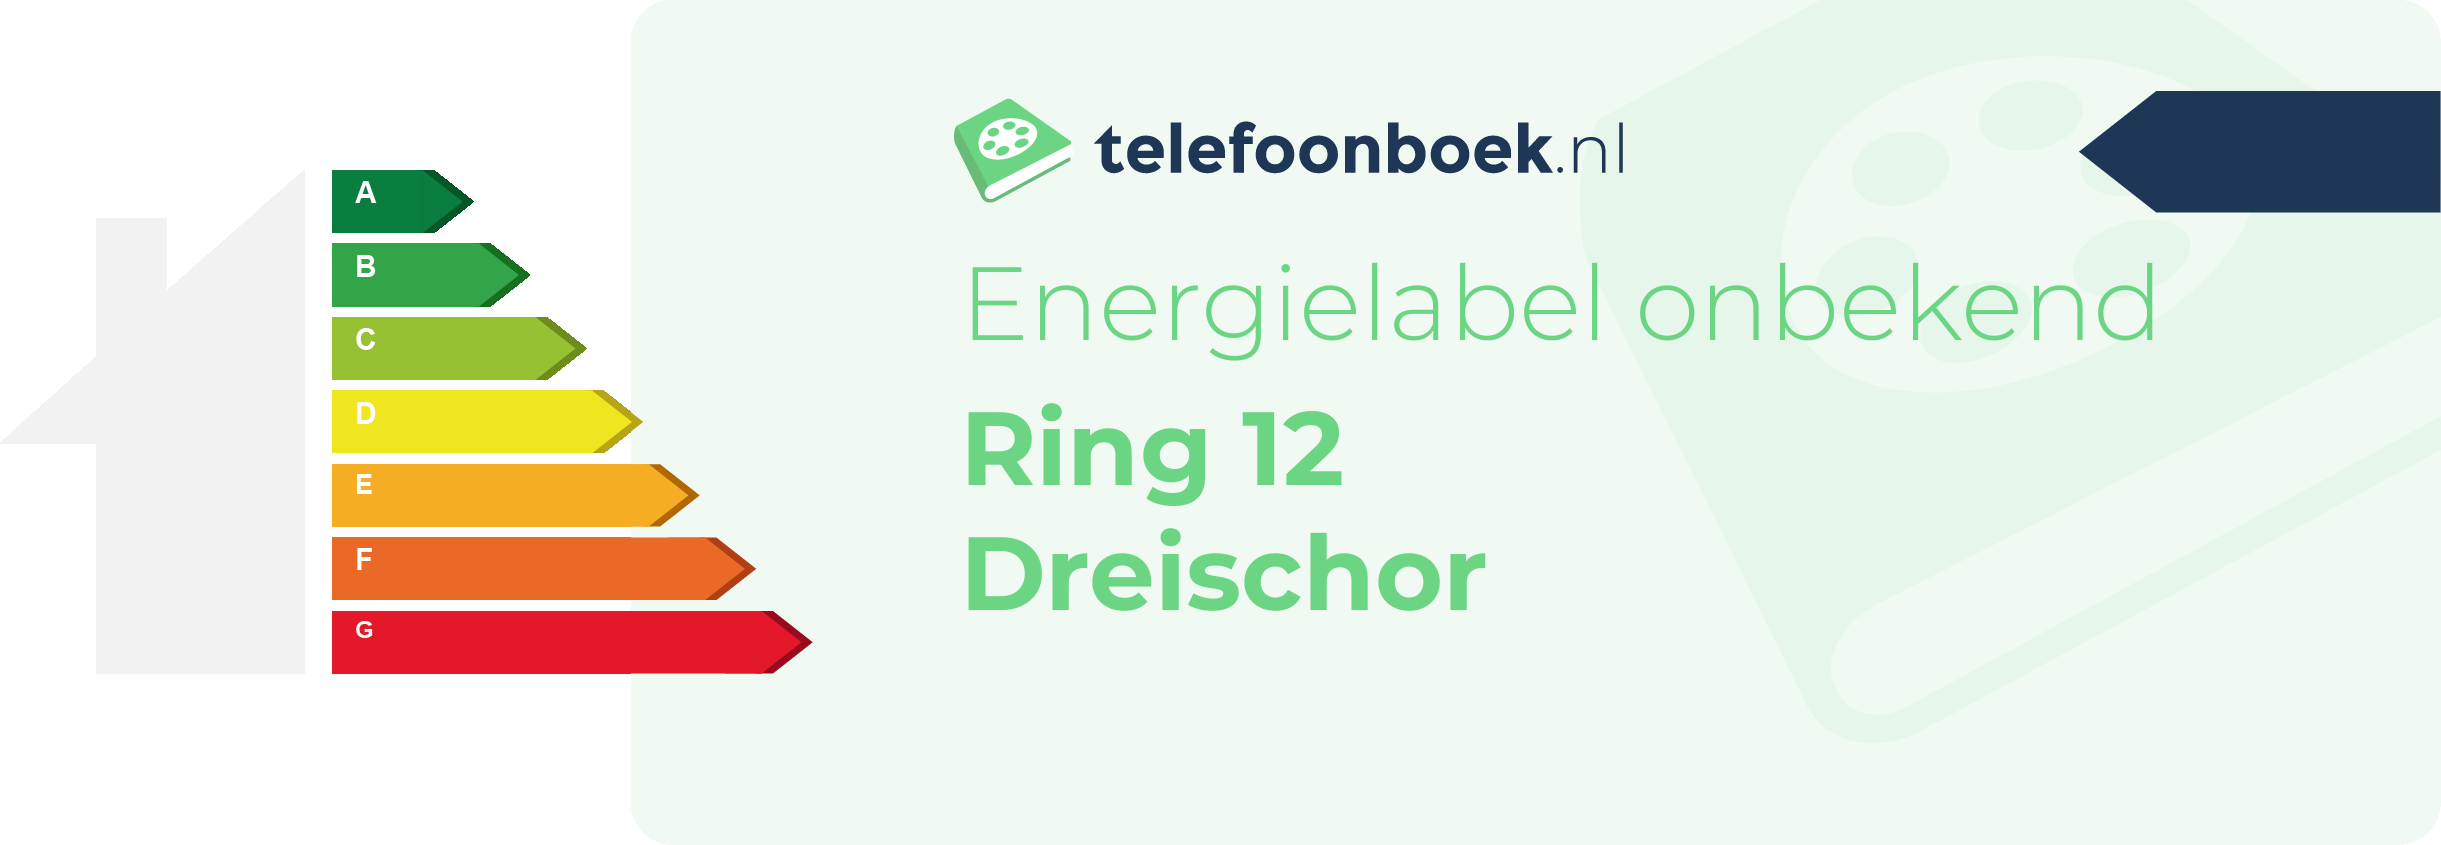 Energielabel Ring 12 Dreischor